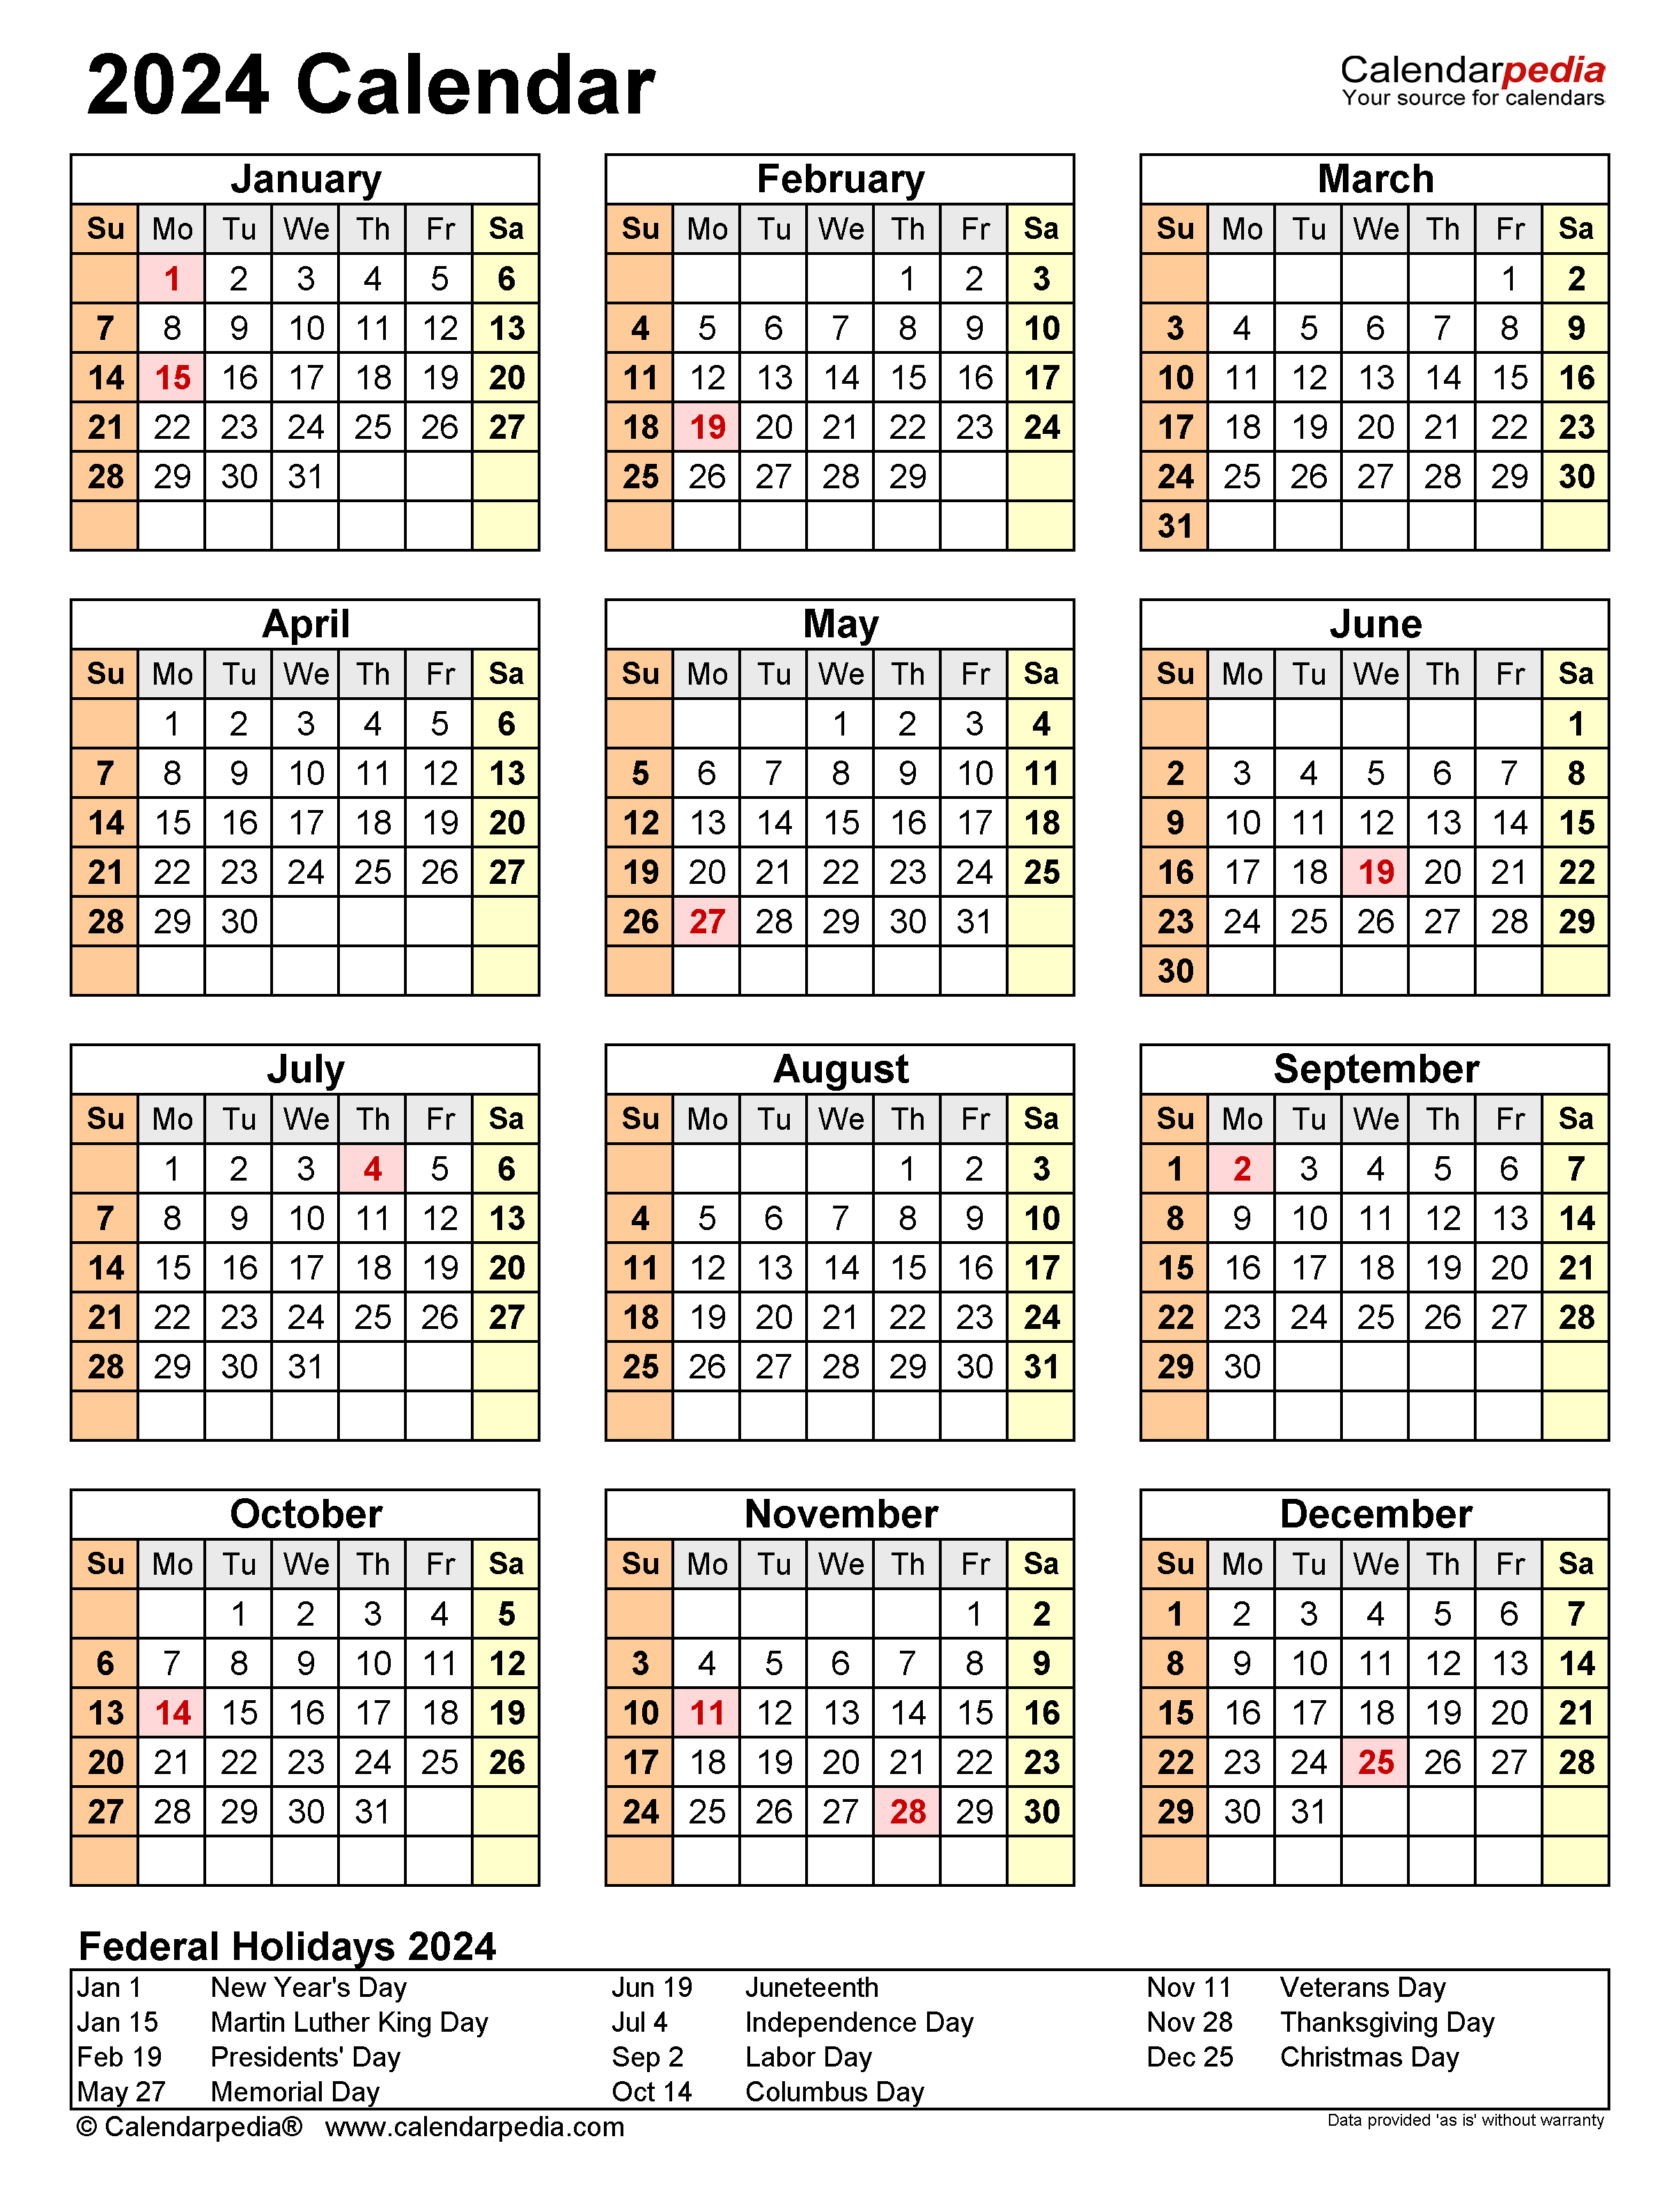 Free Printable 2024 Calendar With Holidays Crownflourmills - Free Printable 2024 Calendar With Holidays Pinterest